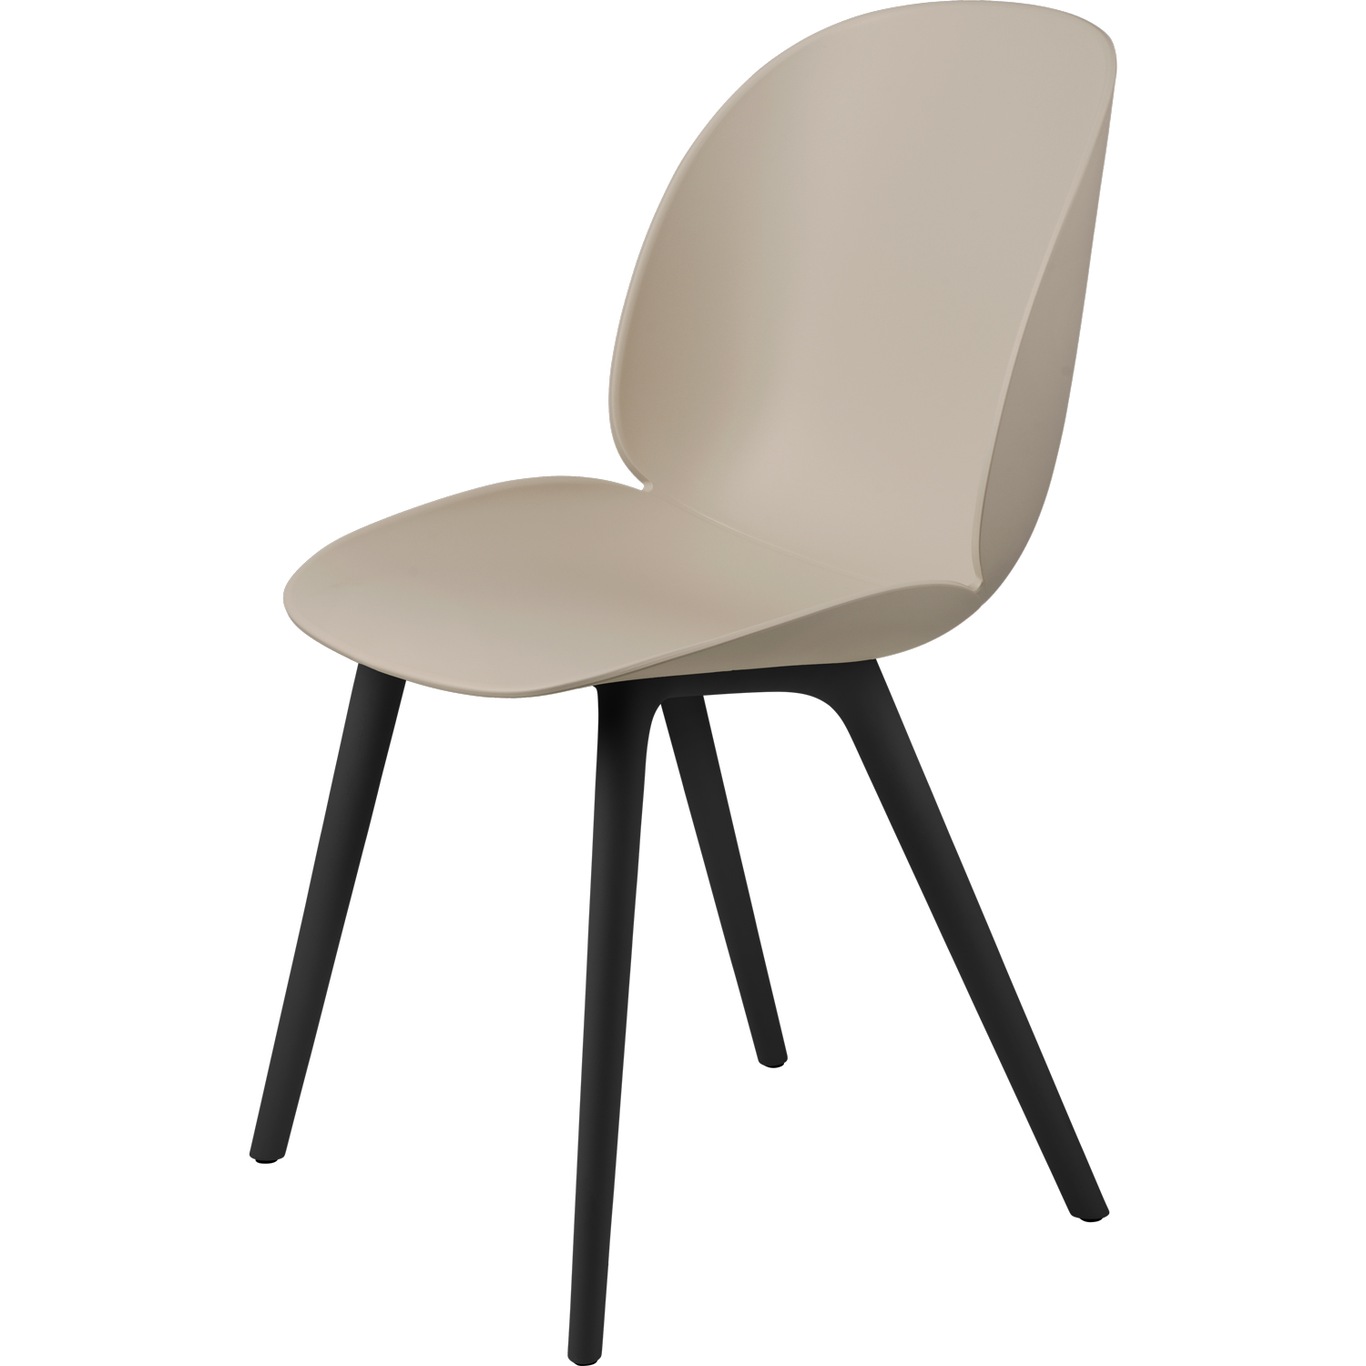 Beetle Chair Un-upholstered Plastic Black Base, New Beige